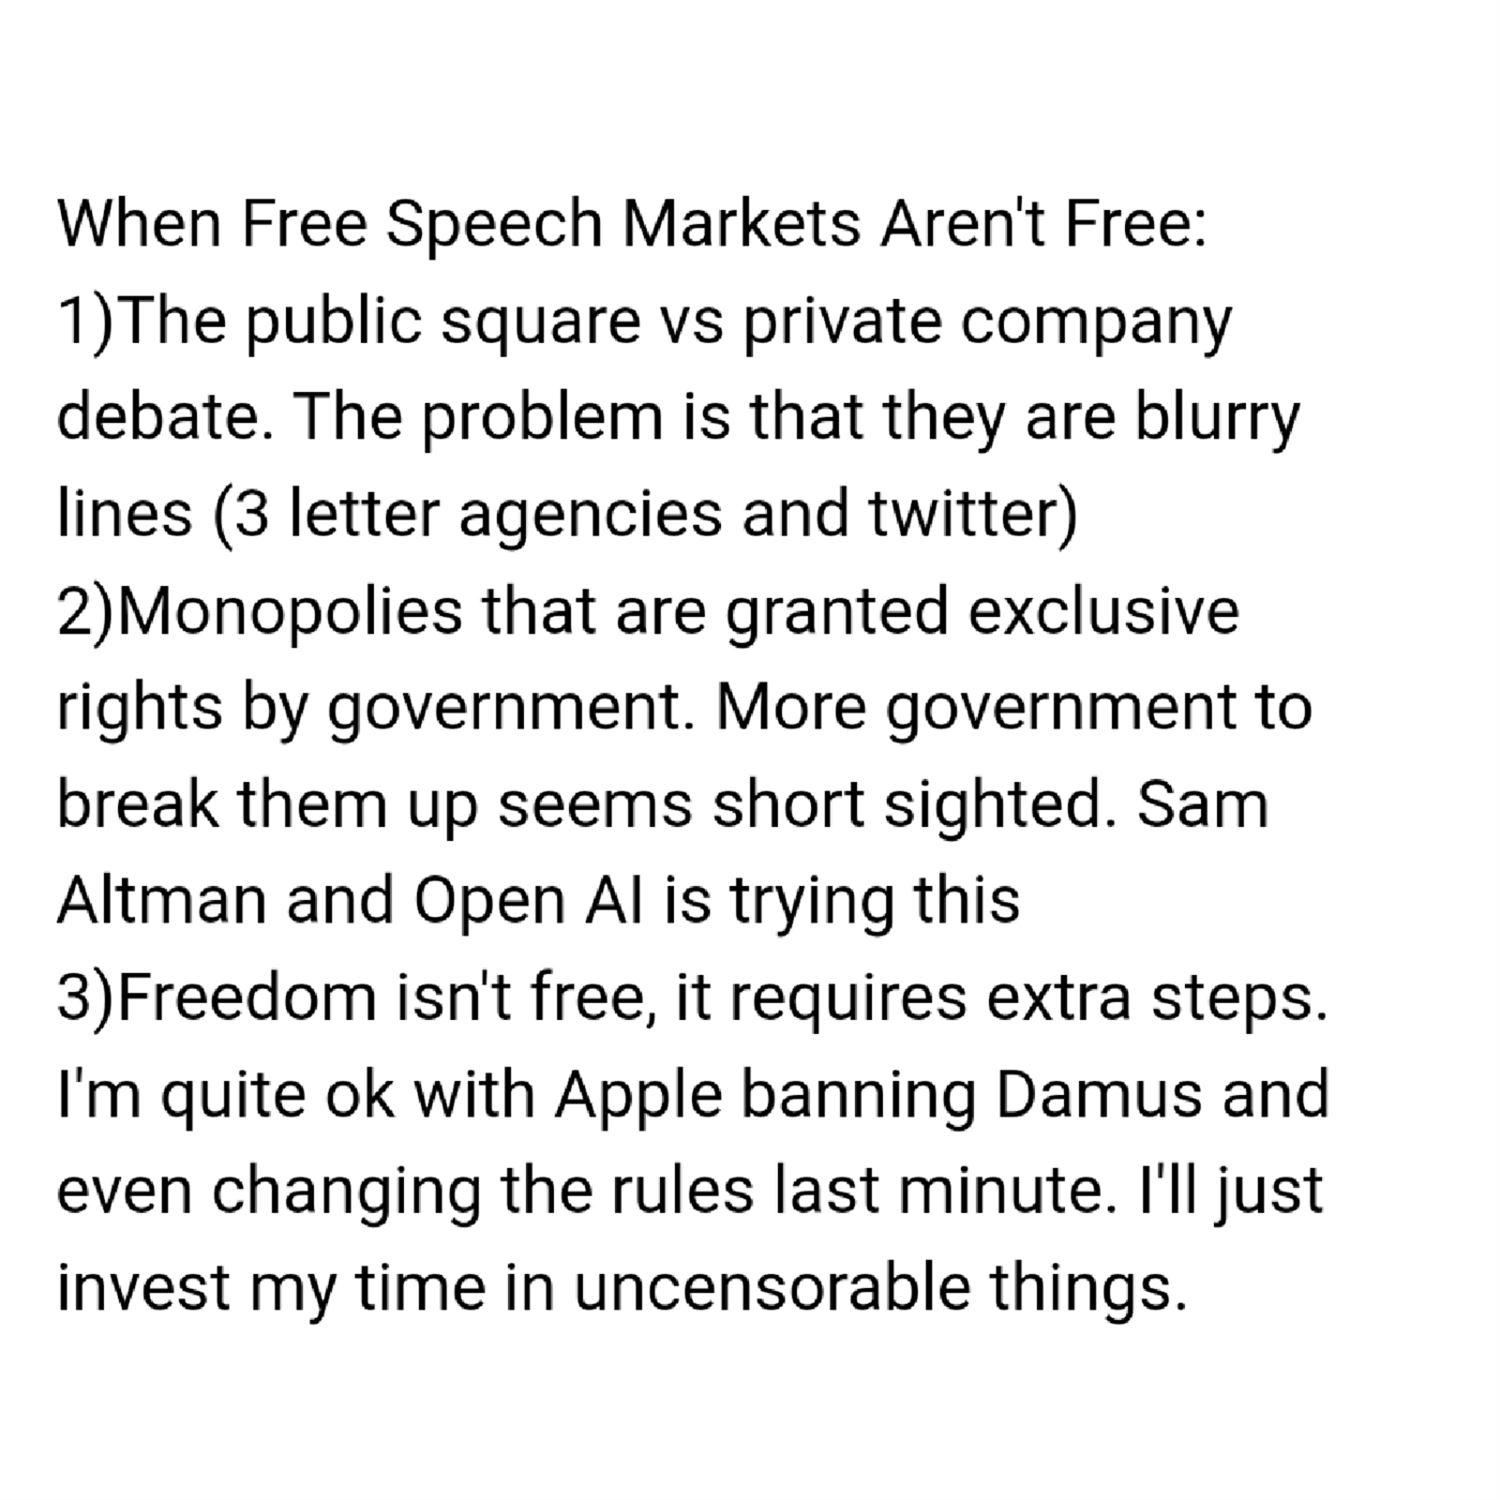 Free speech markets